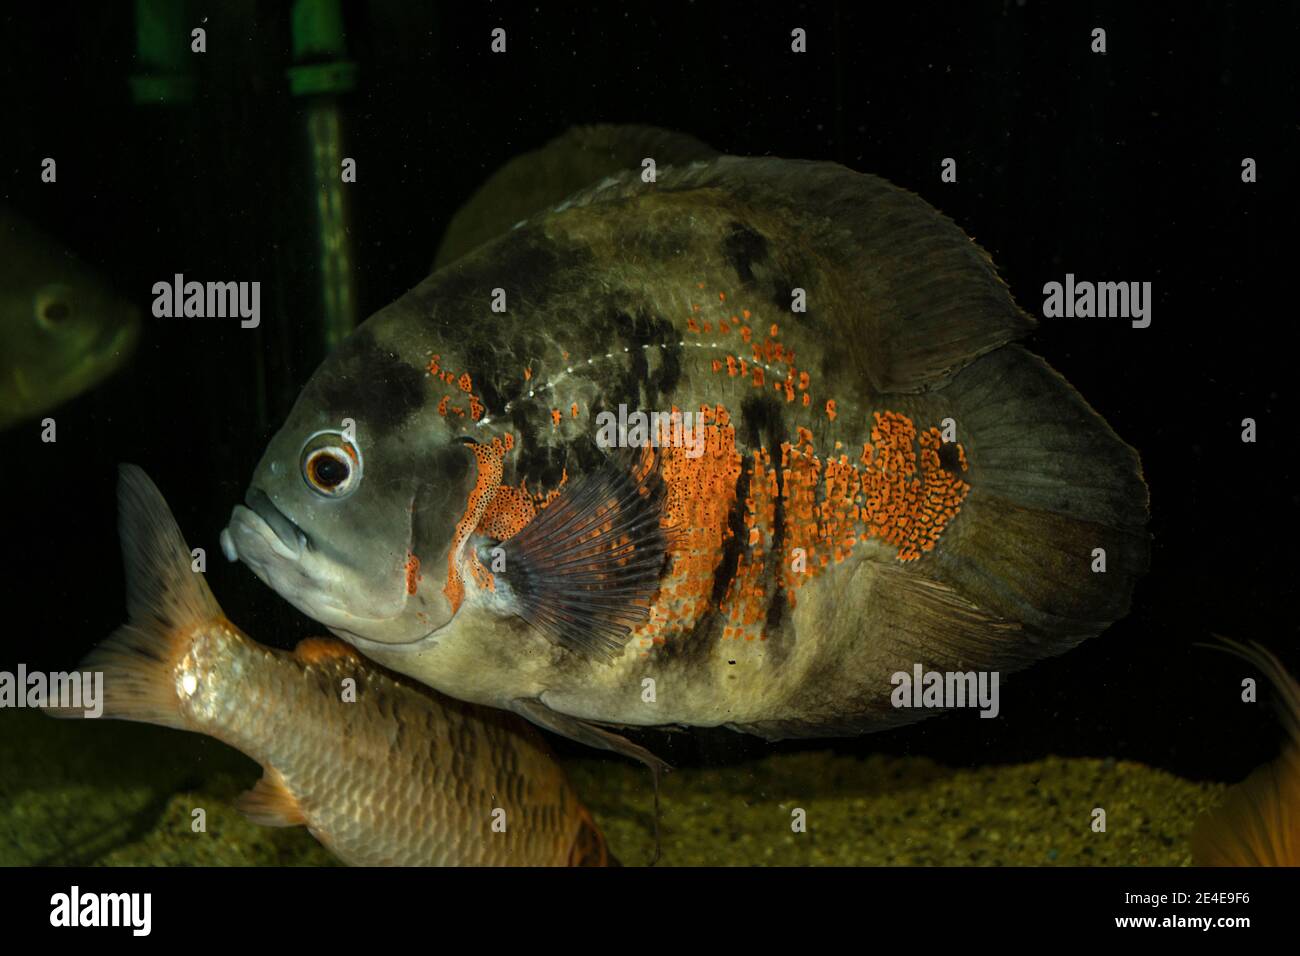 Pesce Oscar Immagini e Fotos Stock - Alamy